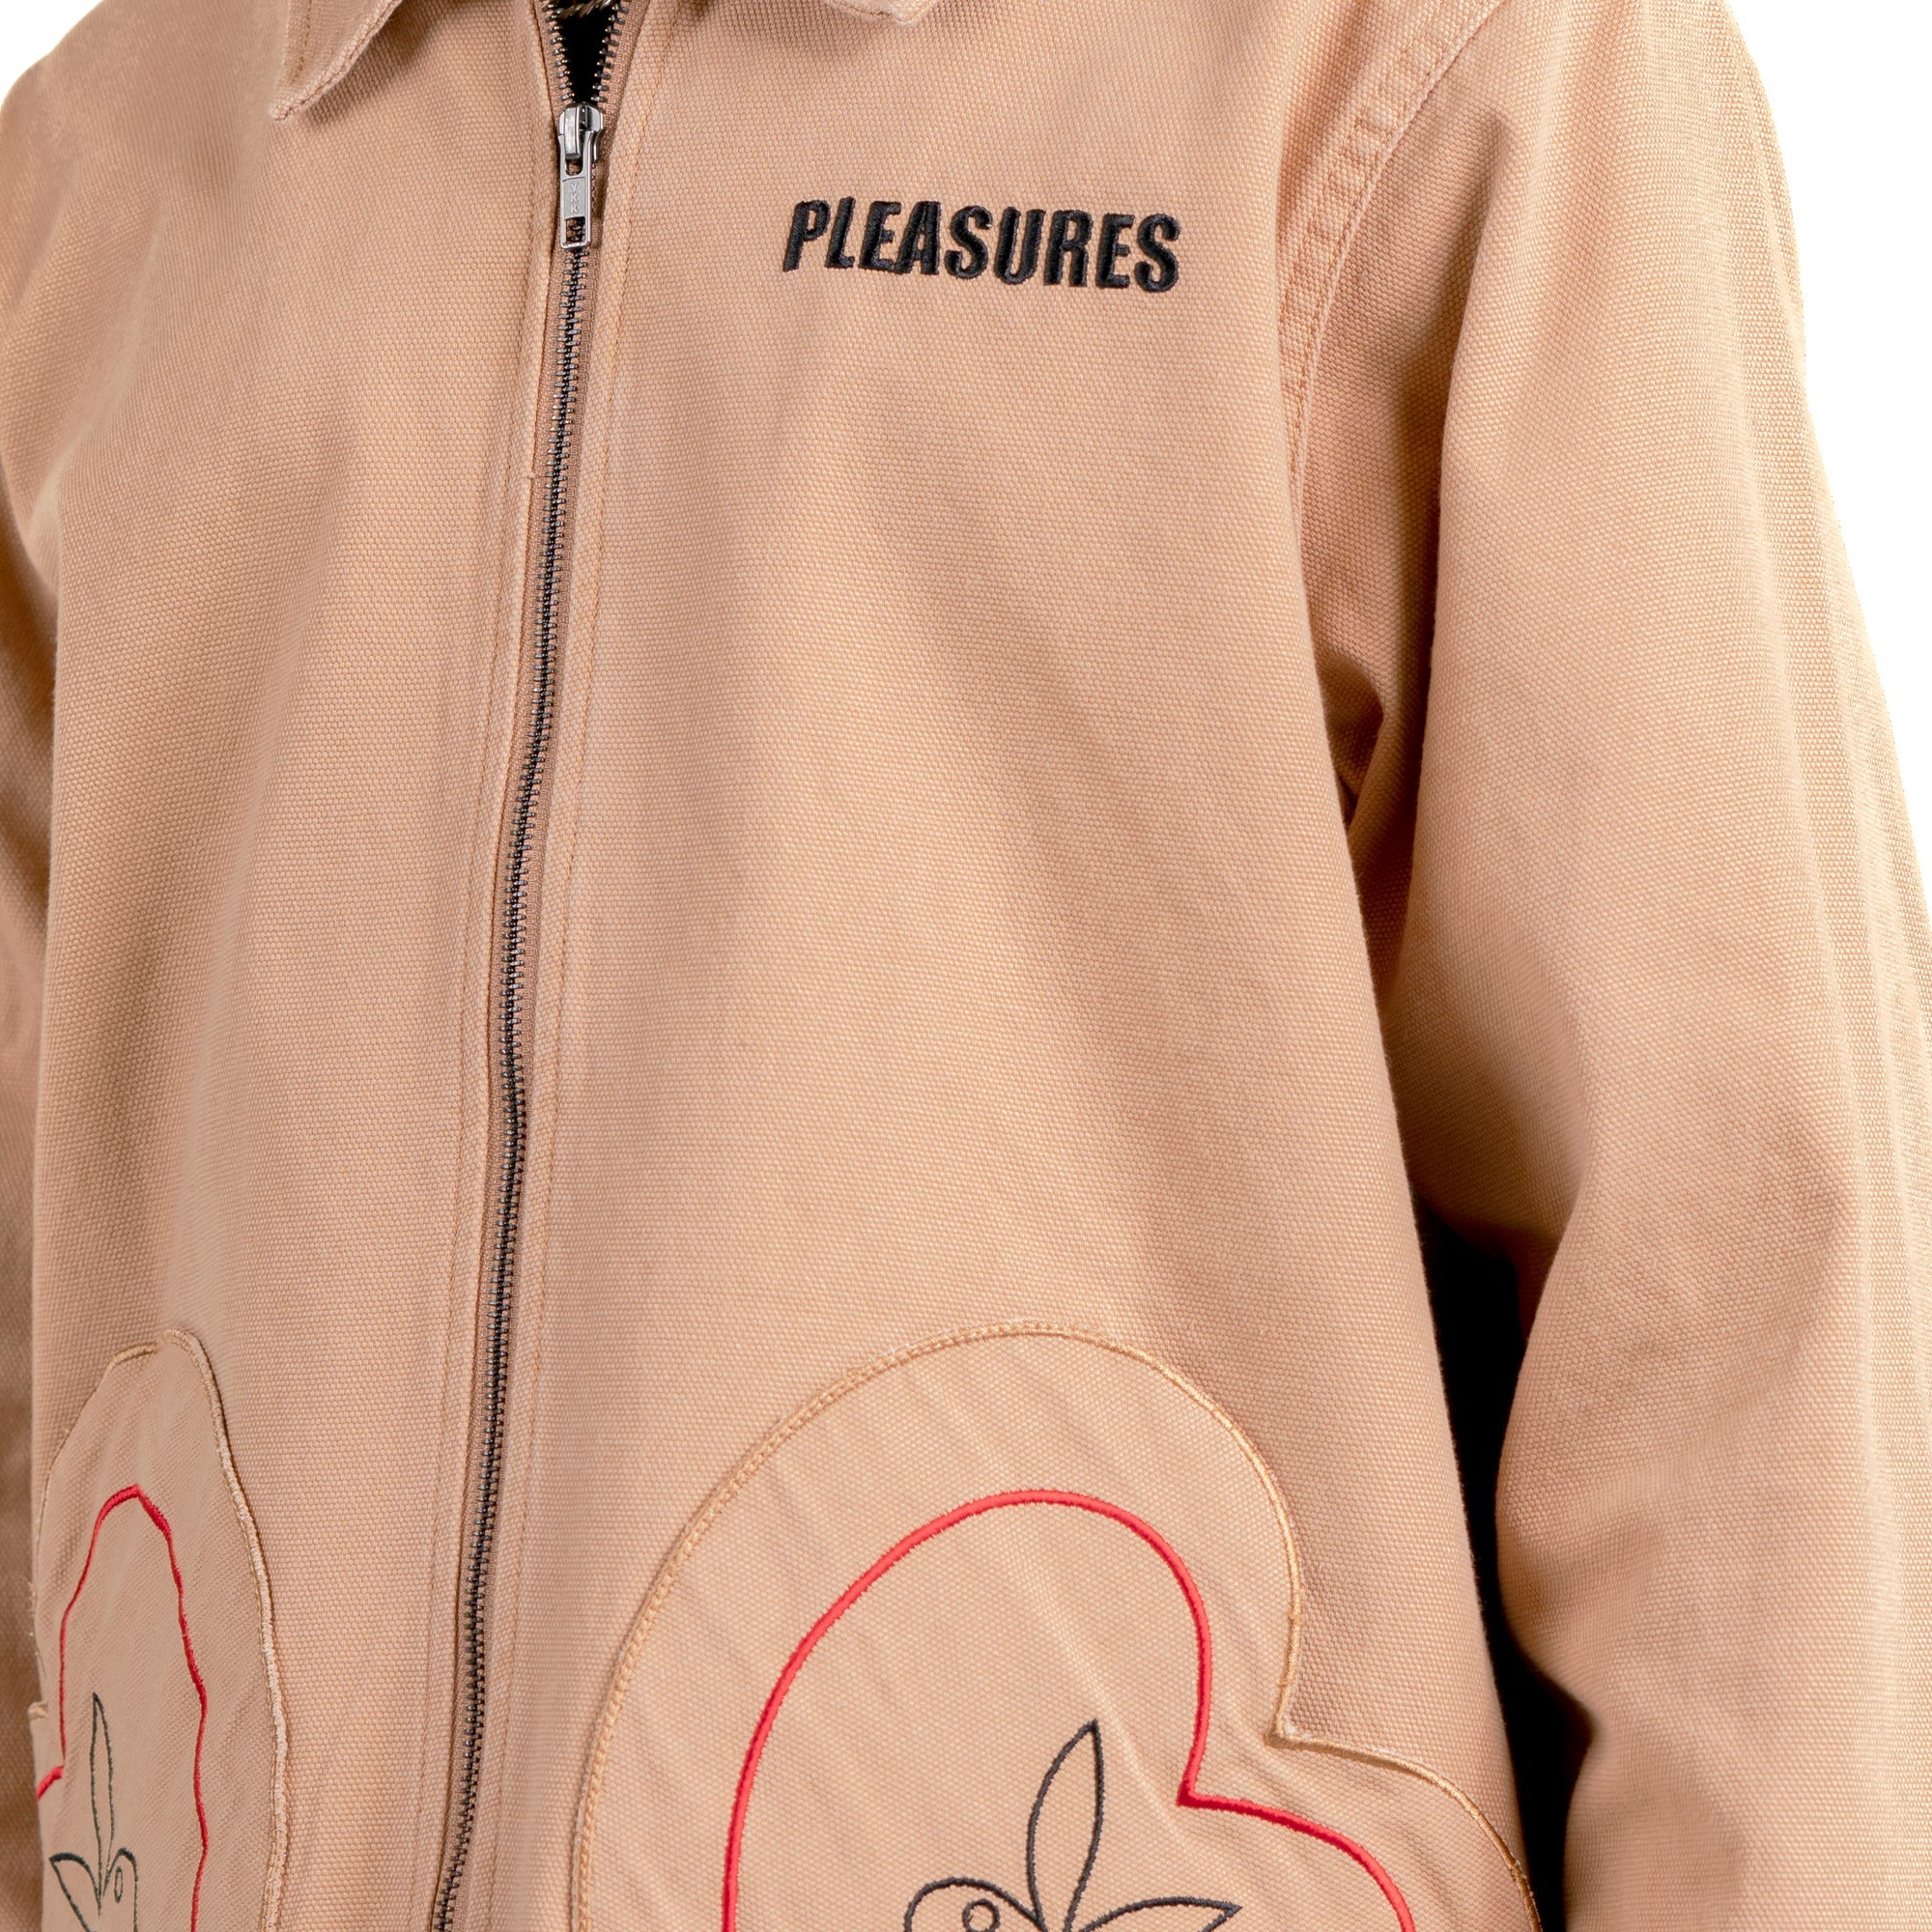 Playboy x Pleasures Open Heart Jacket